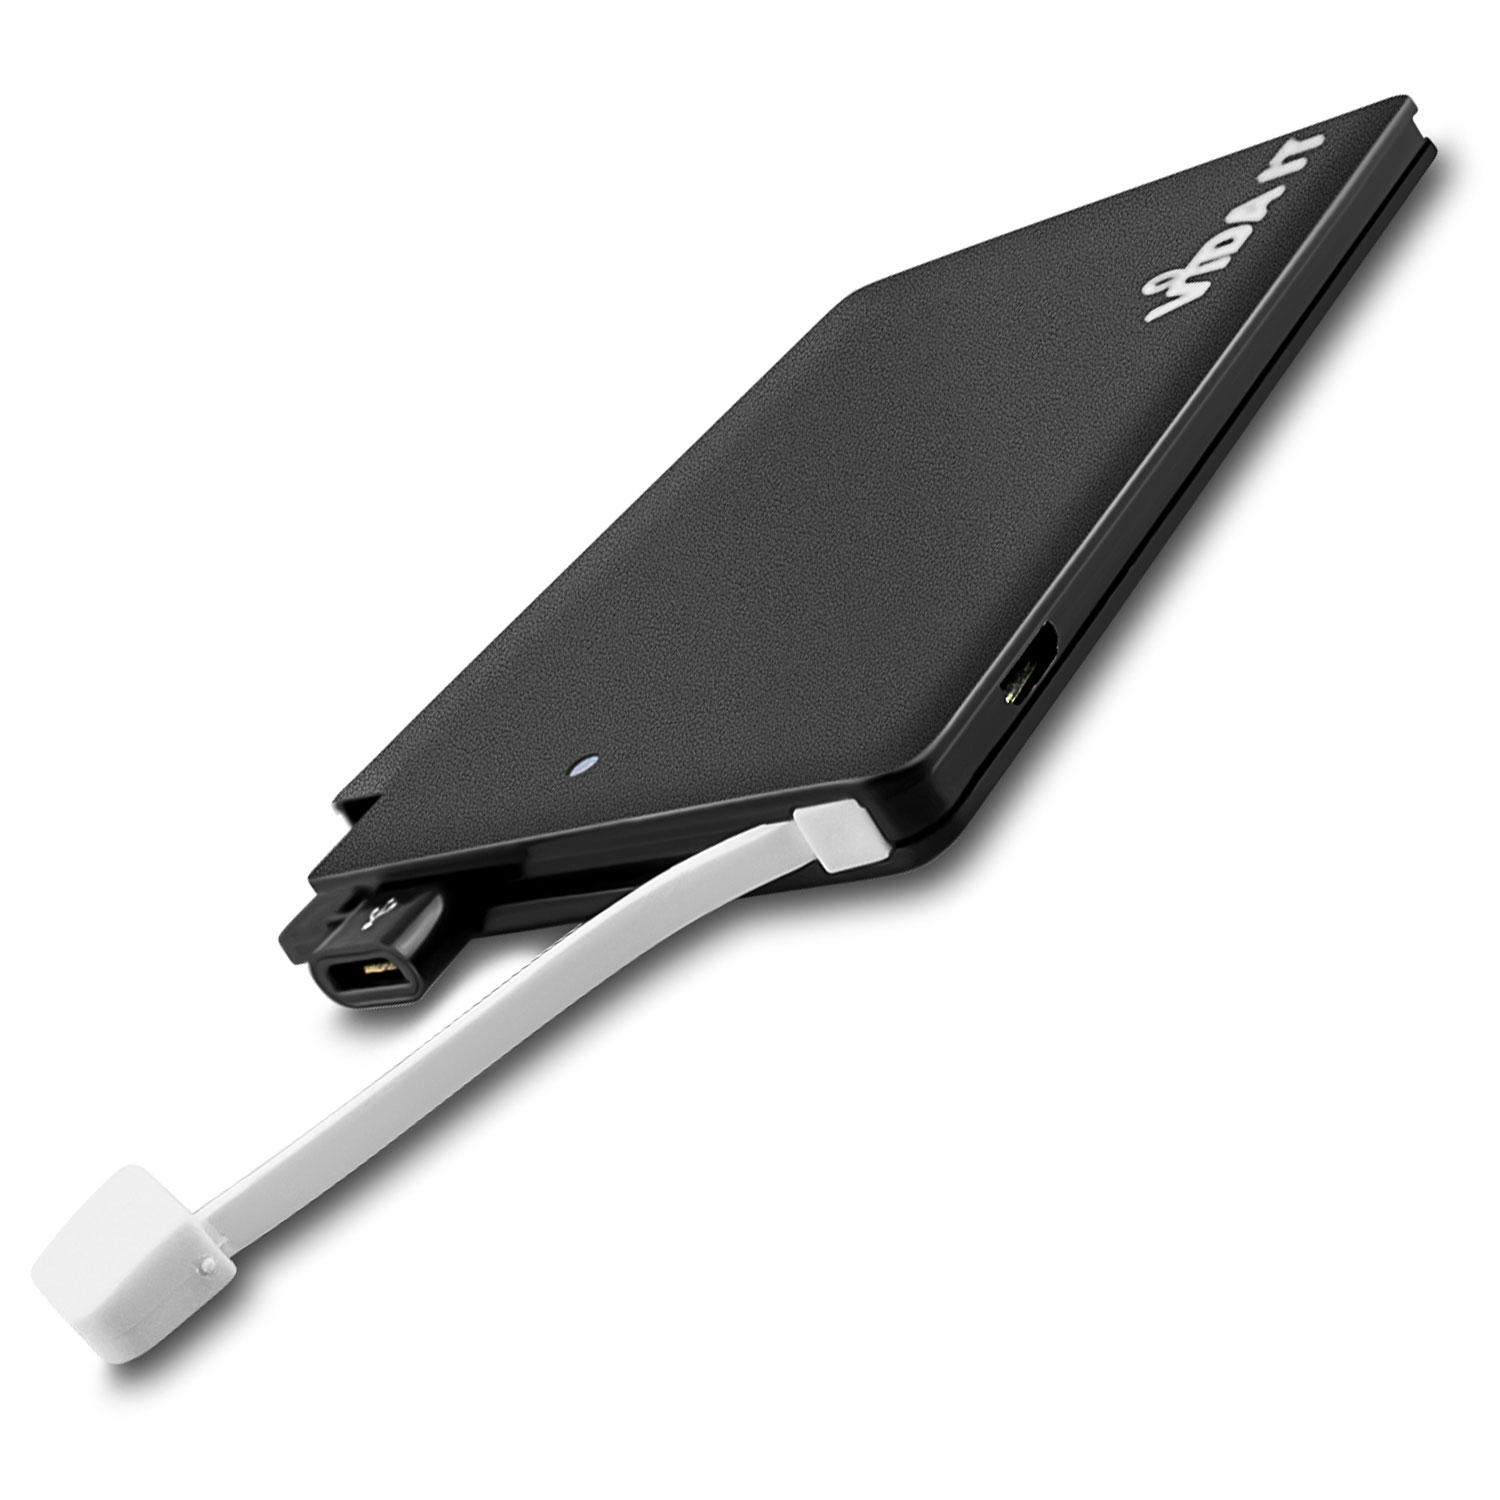 Tragbare Akku Extern PowerBank 2500mAh Ladegerät mit einem integrierten Micro-USB-Kabel & iPhone-Lightning und USB Typ-C Adaptern